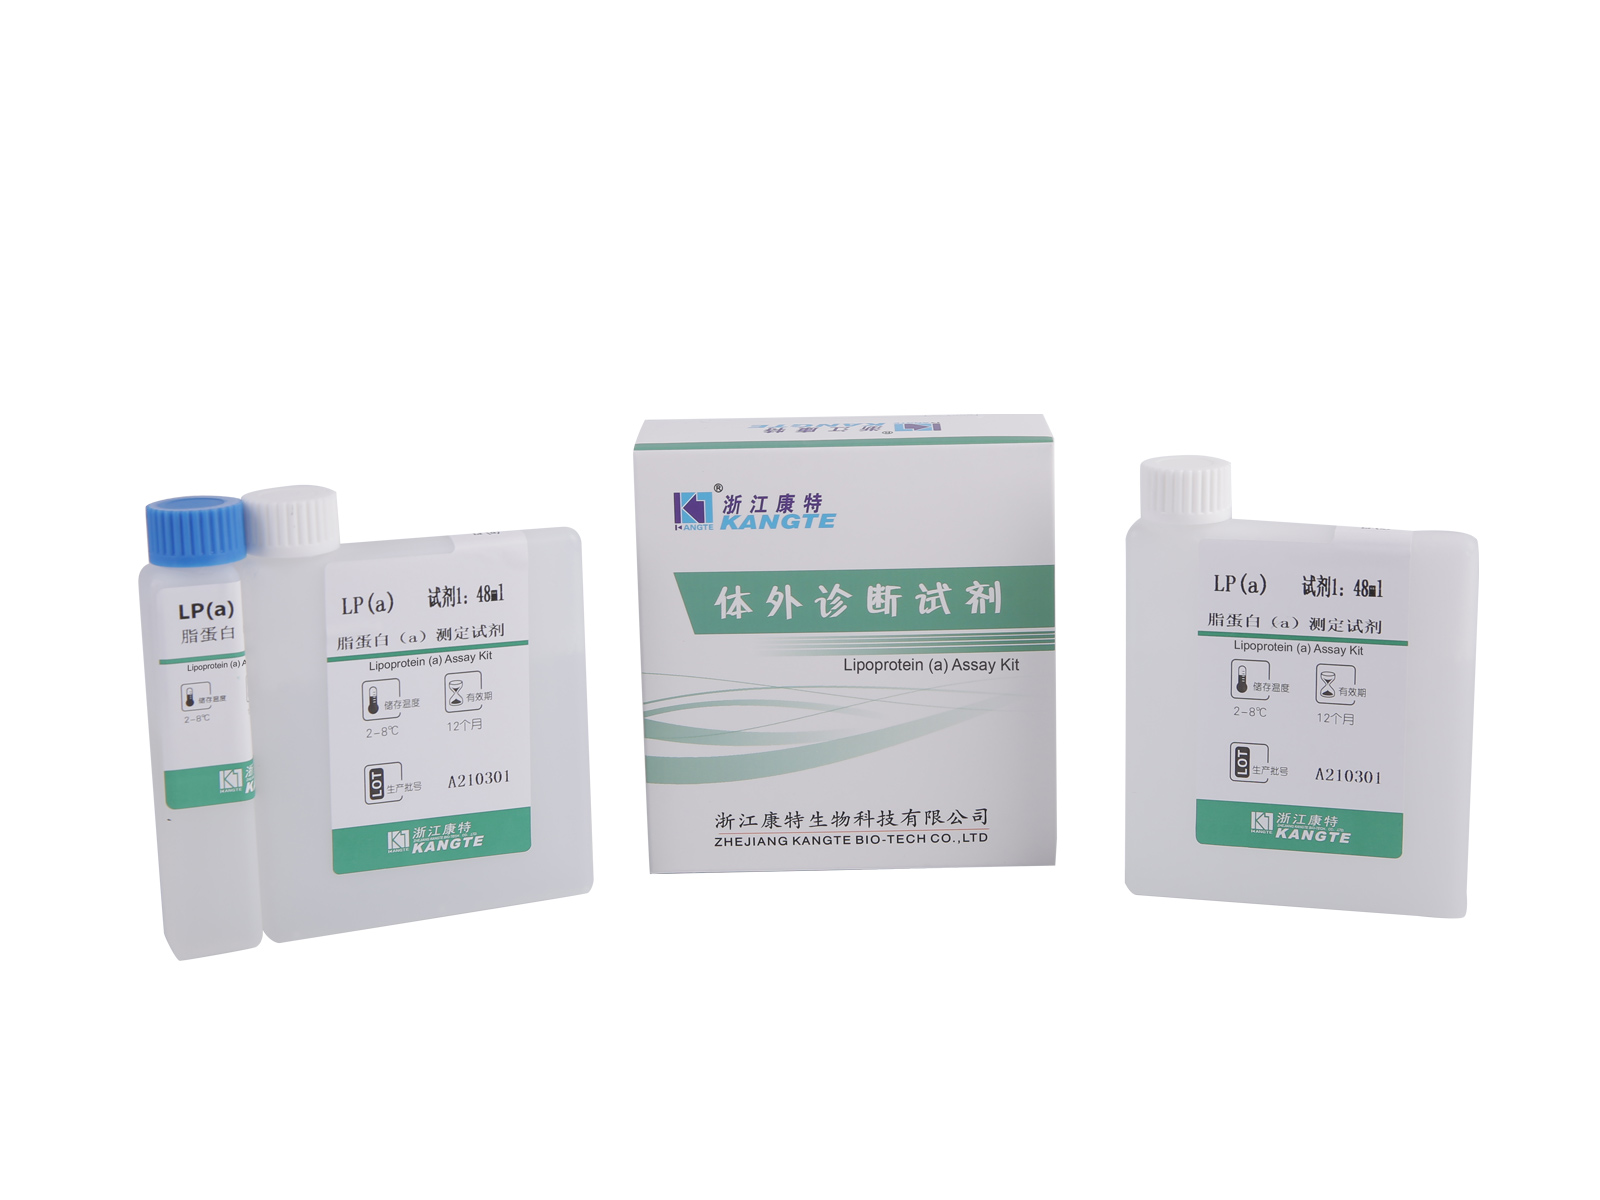 【LP(a)】Lipoprotein (a) Assay Kit (Latex Enhanced Imunoturbidimetric Method)